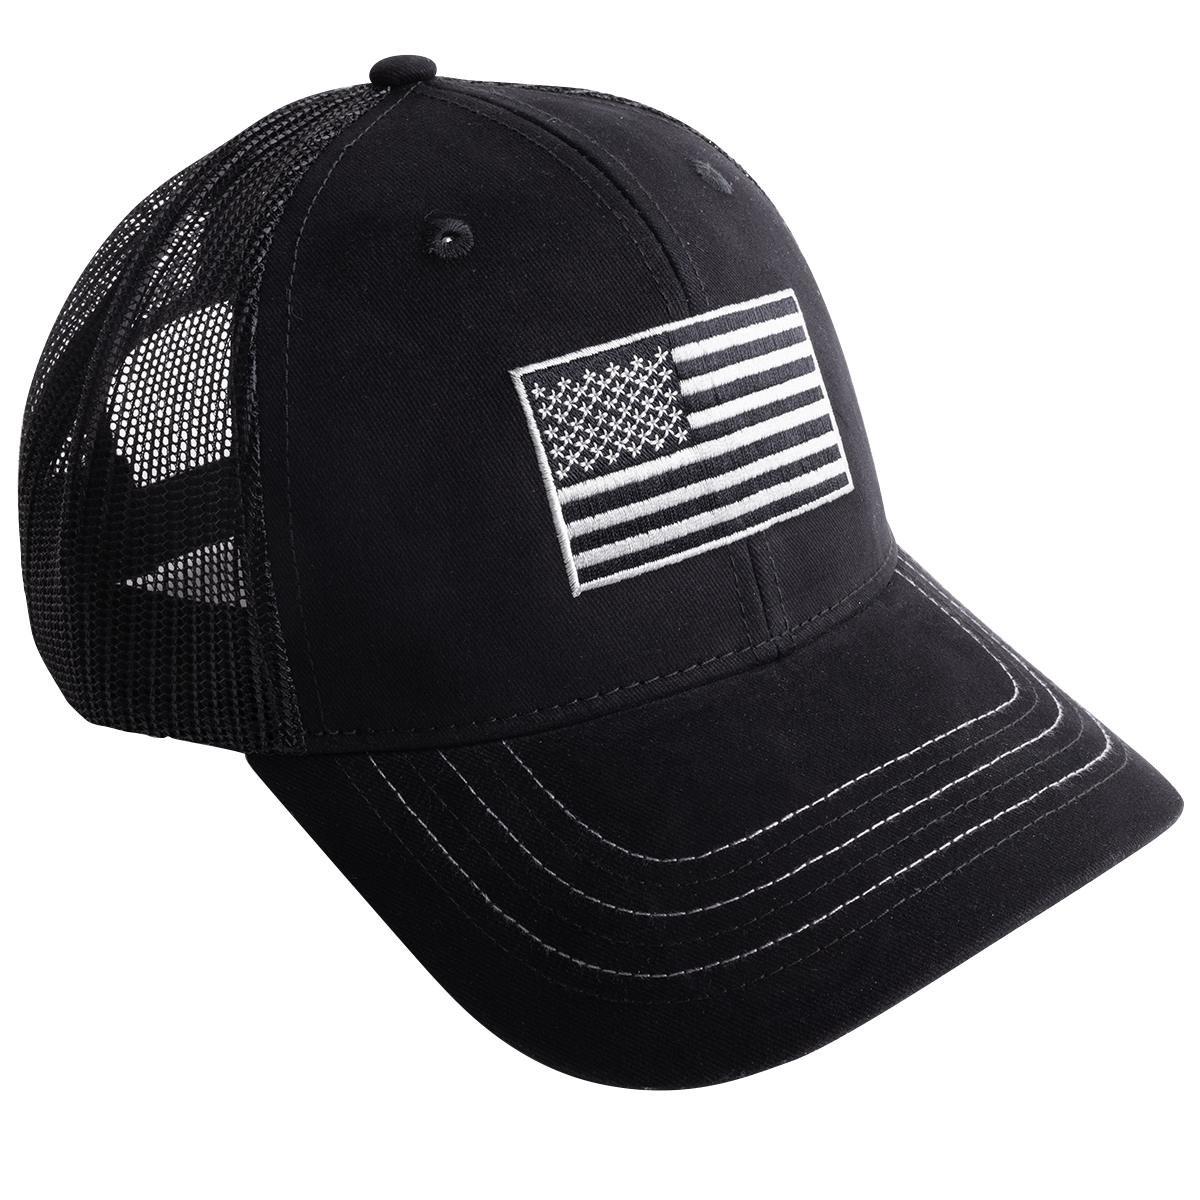 BlackCanyon Outfitters BCOCAPBLKFLG American Flag Patch Cap Patriotic Trucker Hat USA Flag Baseball Cap-Black